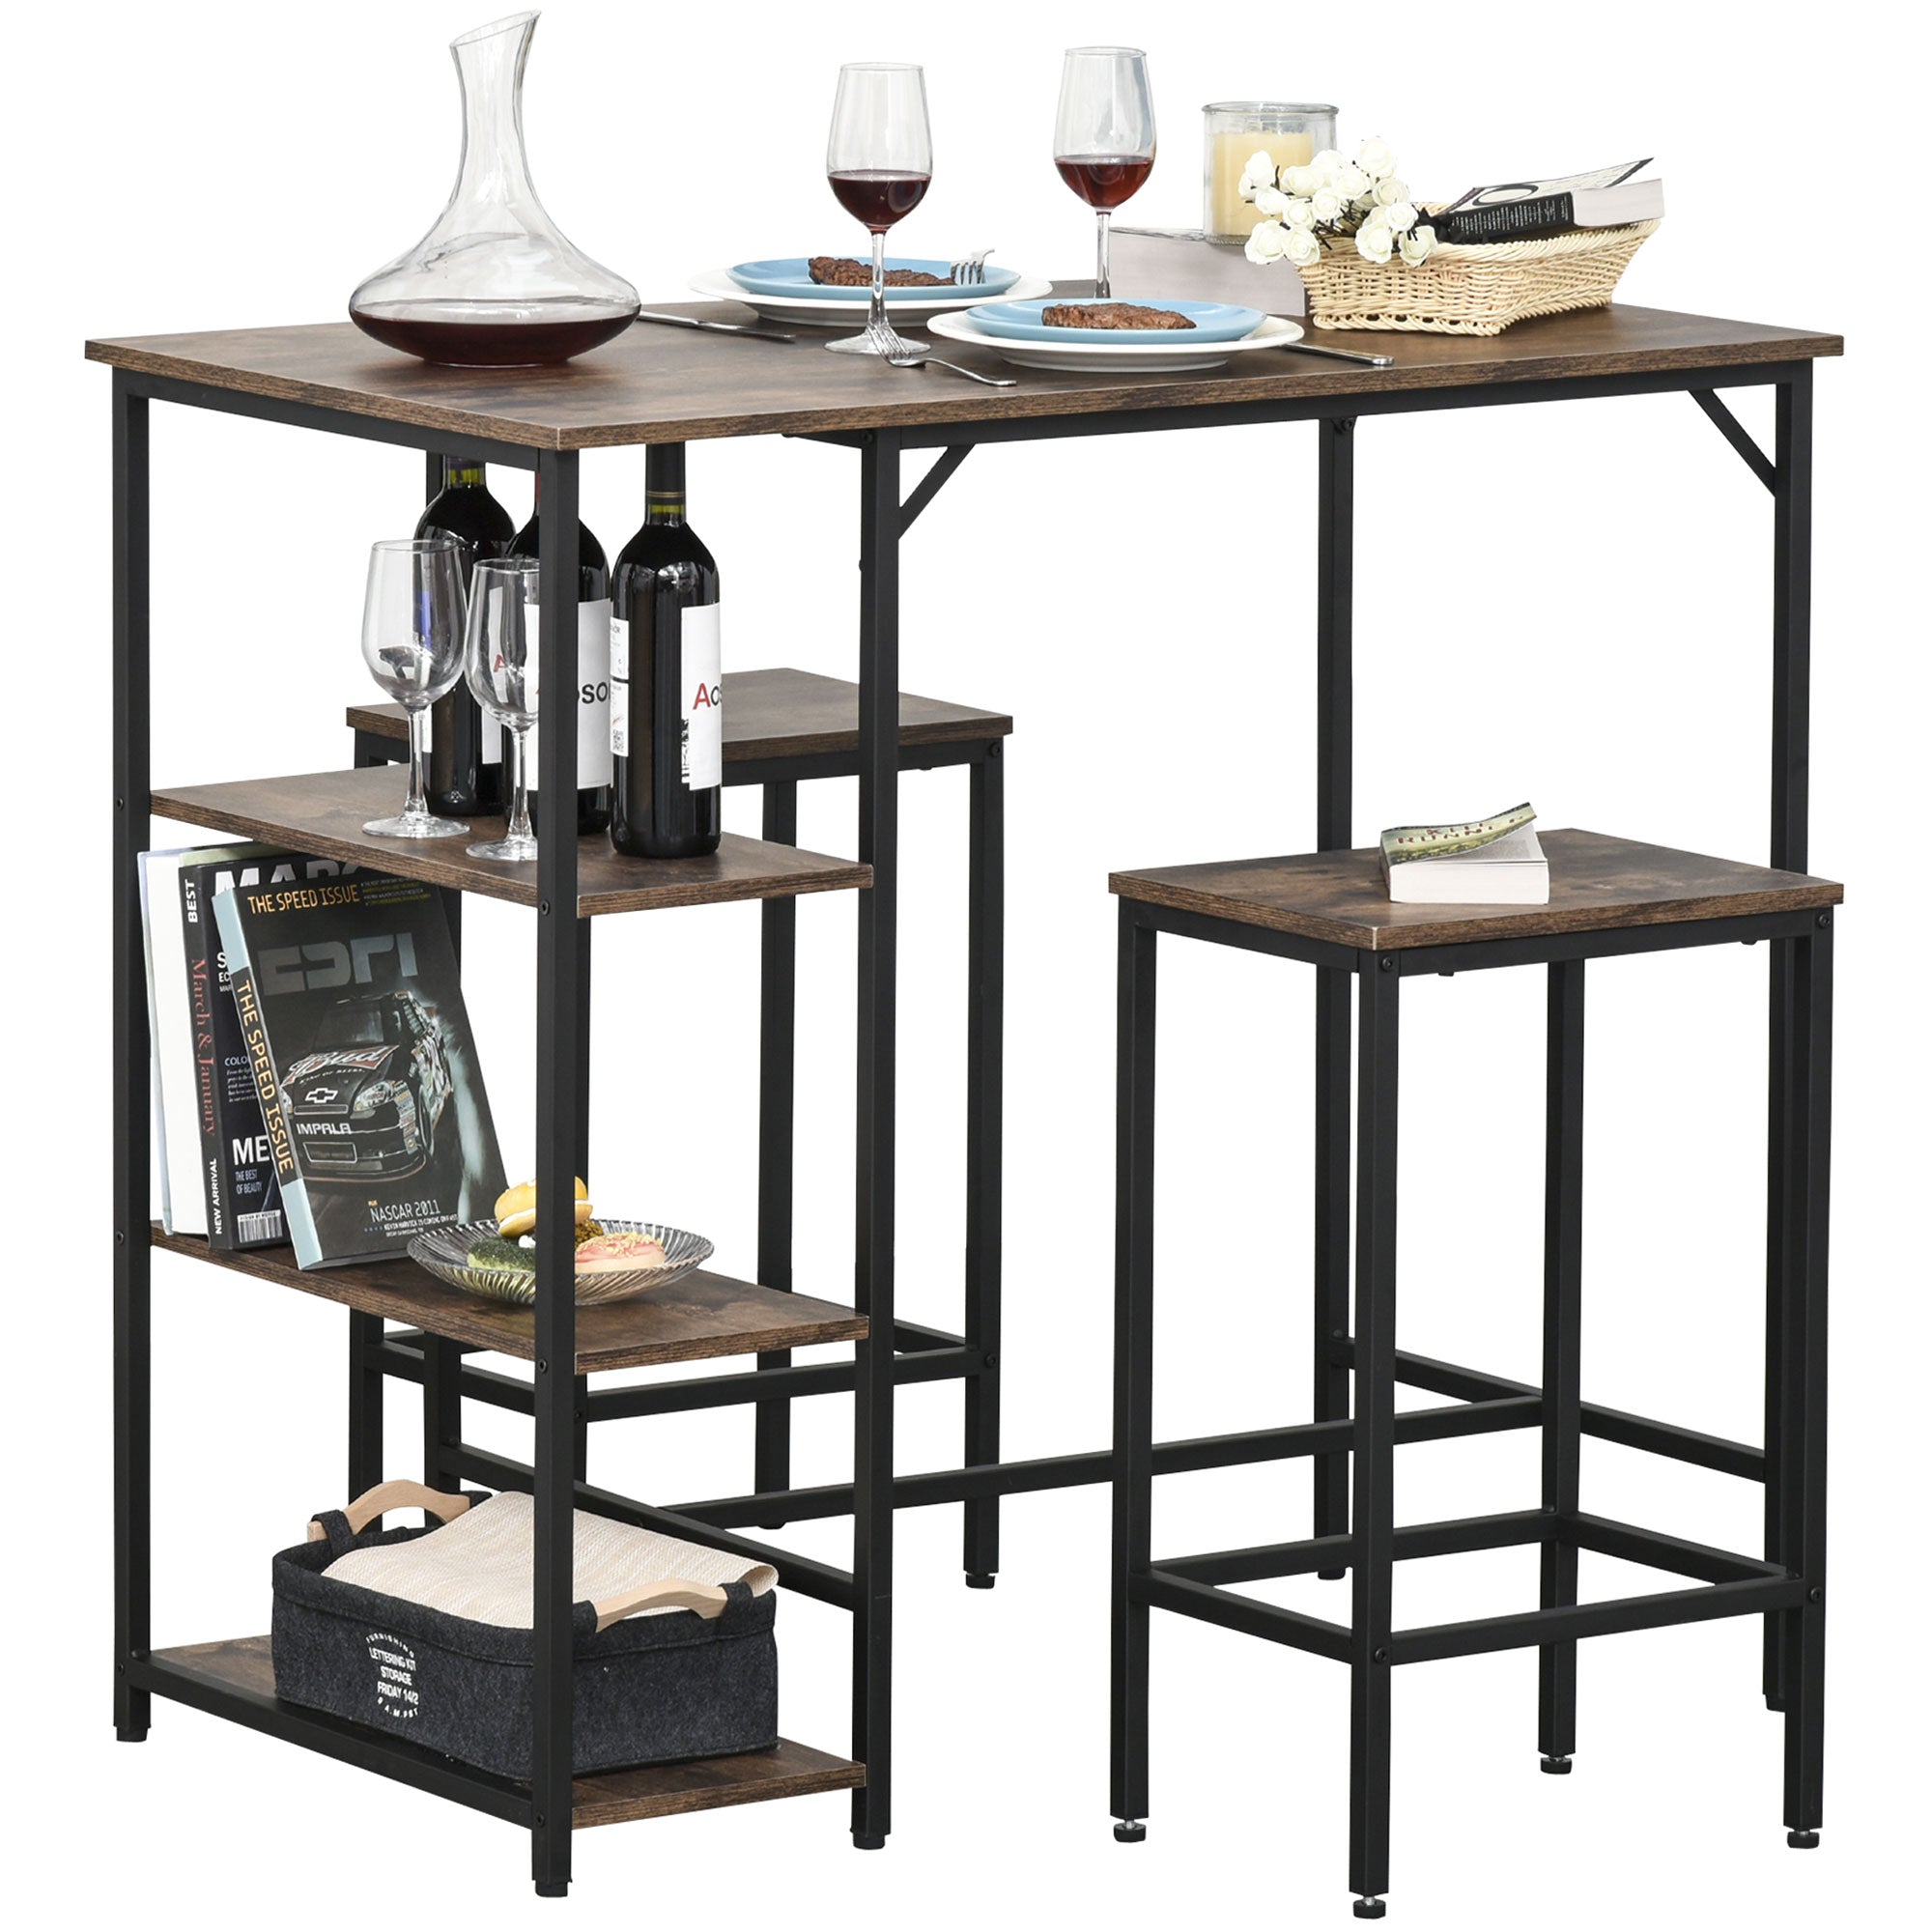 Nancy's Laie Bar Table Set - 2 Bar Stools - High Table - Steel - Black/Brown - 109 x 60 x 100 cm